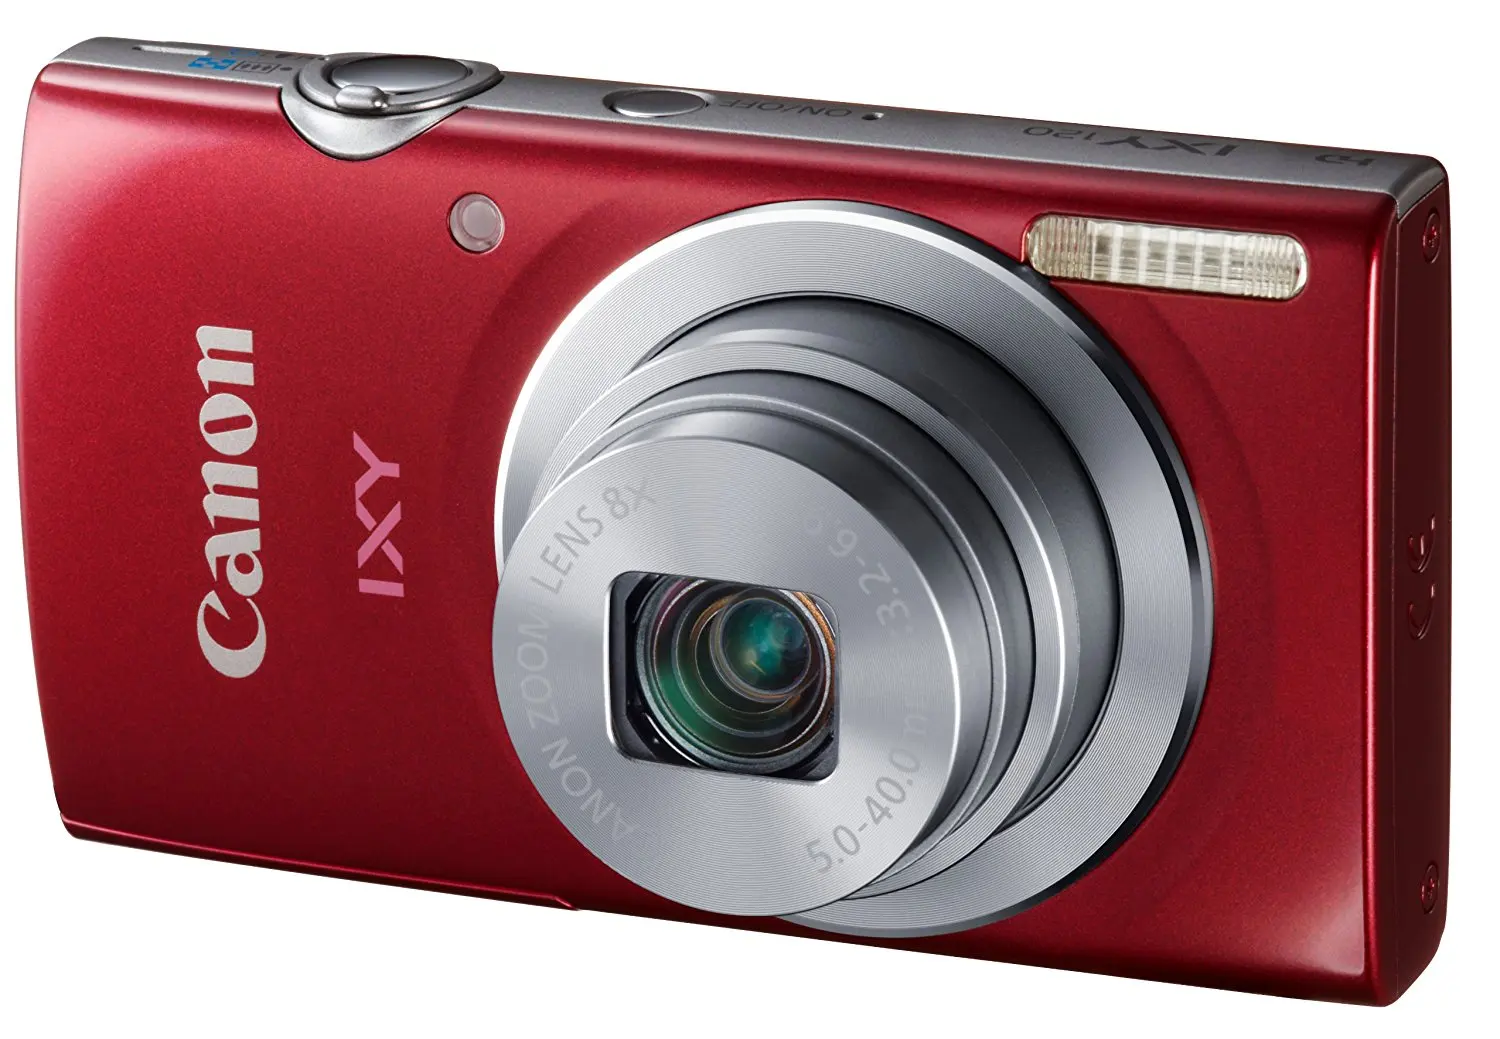 Buy Canon Digital Camera Ixy 620f 24mm Wide Angle 10x Optical Zoom Ixy620f Silver International Version In Cheap Price On Alibaba Com